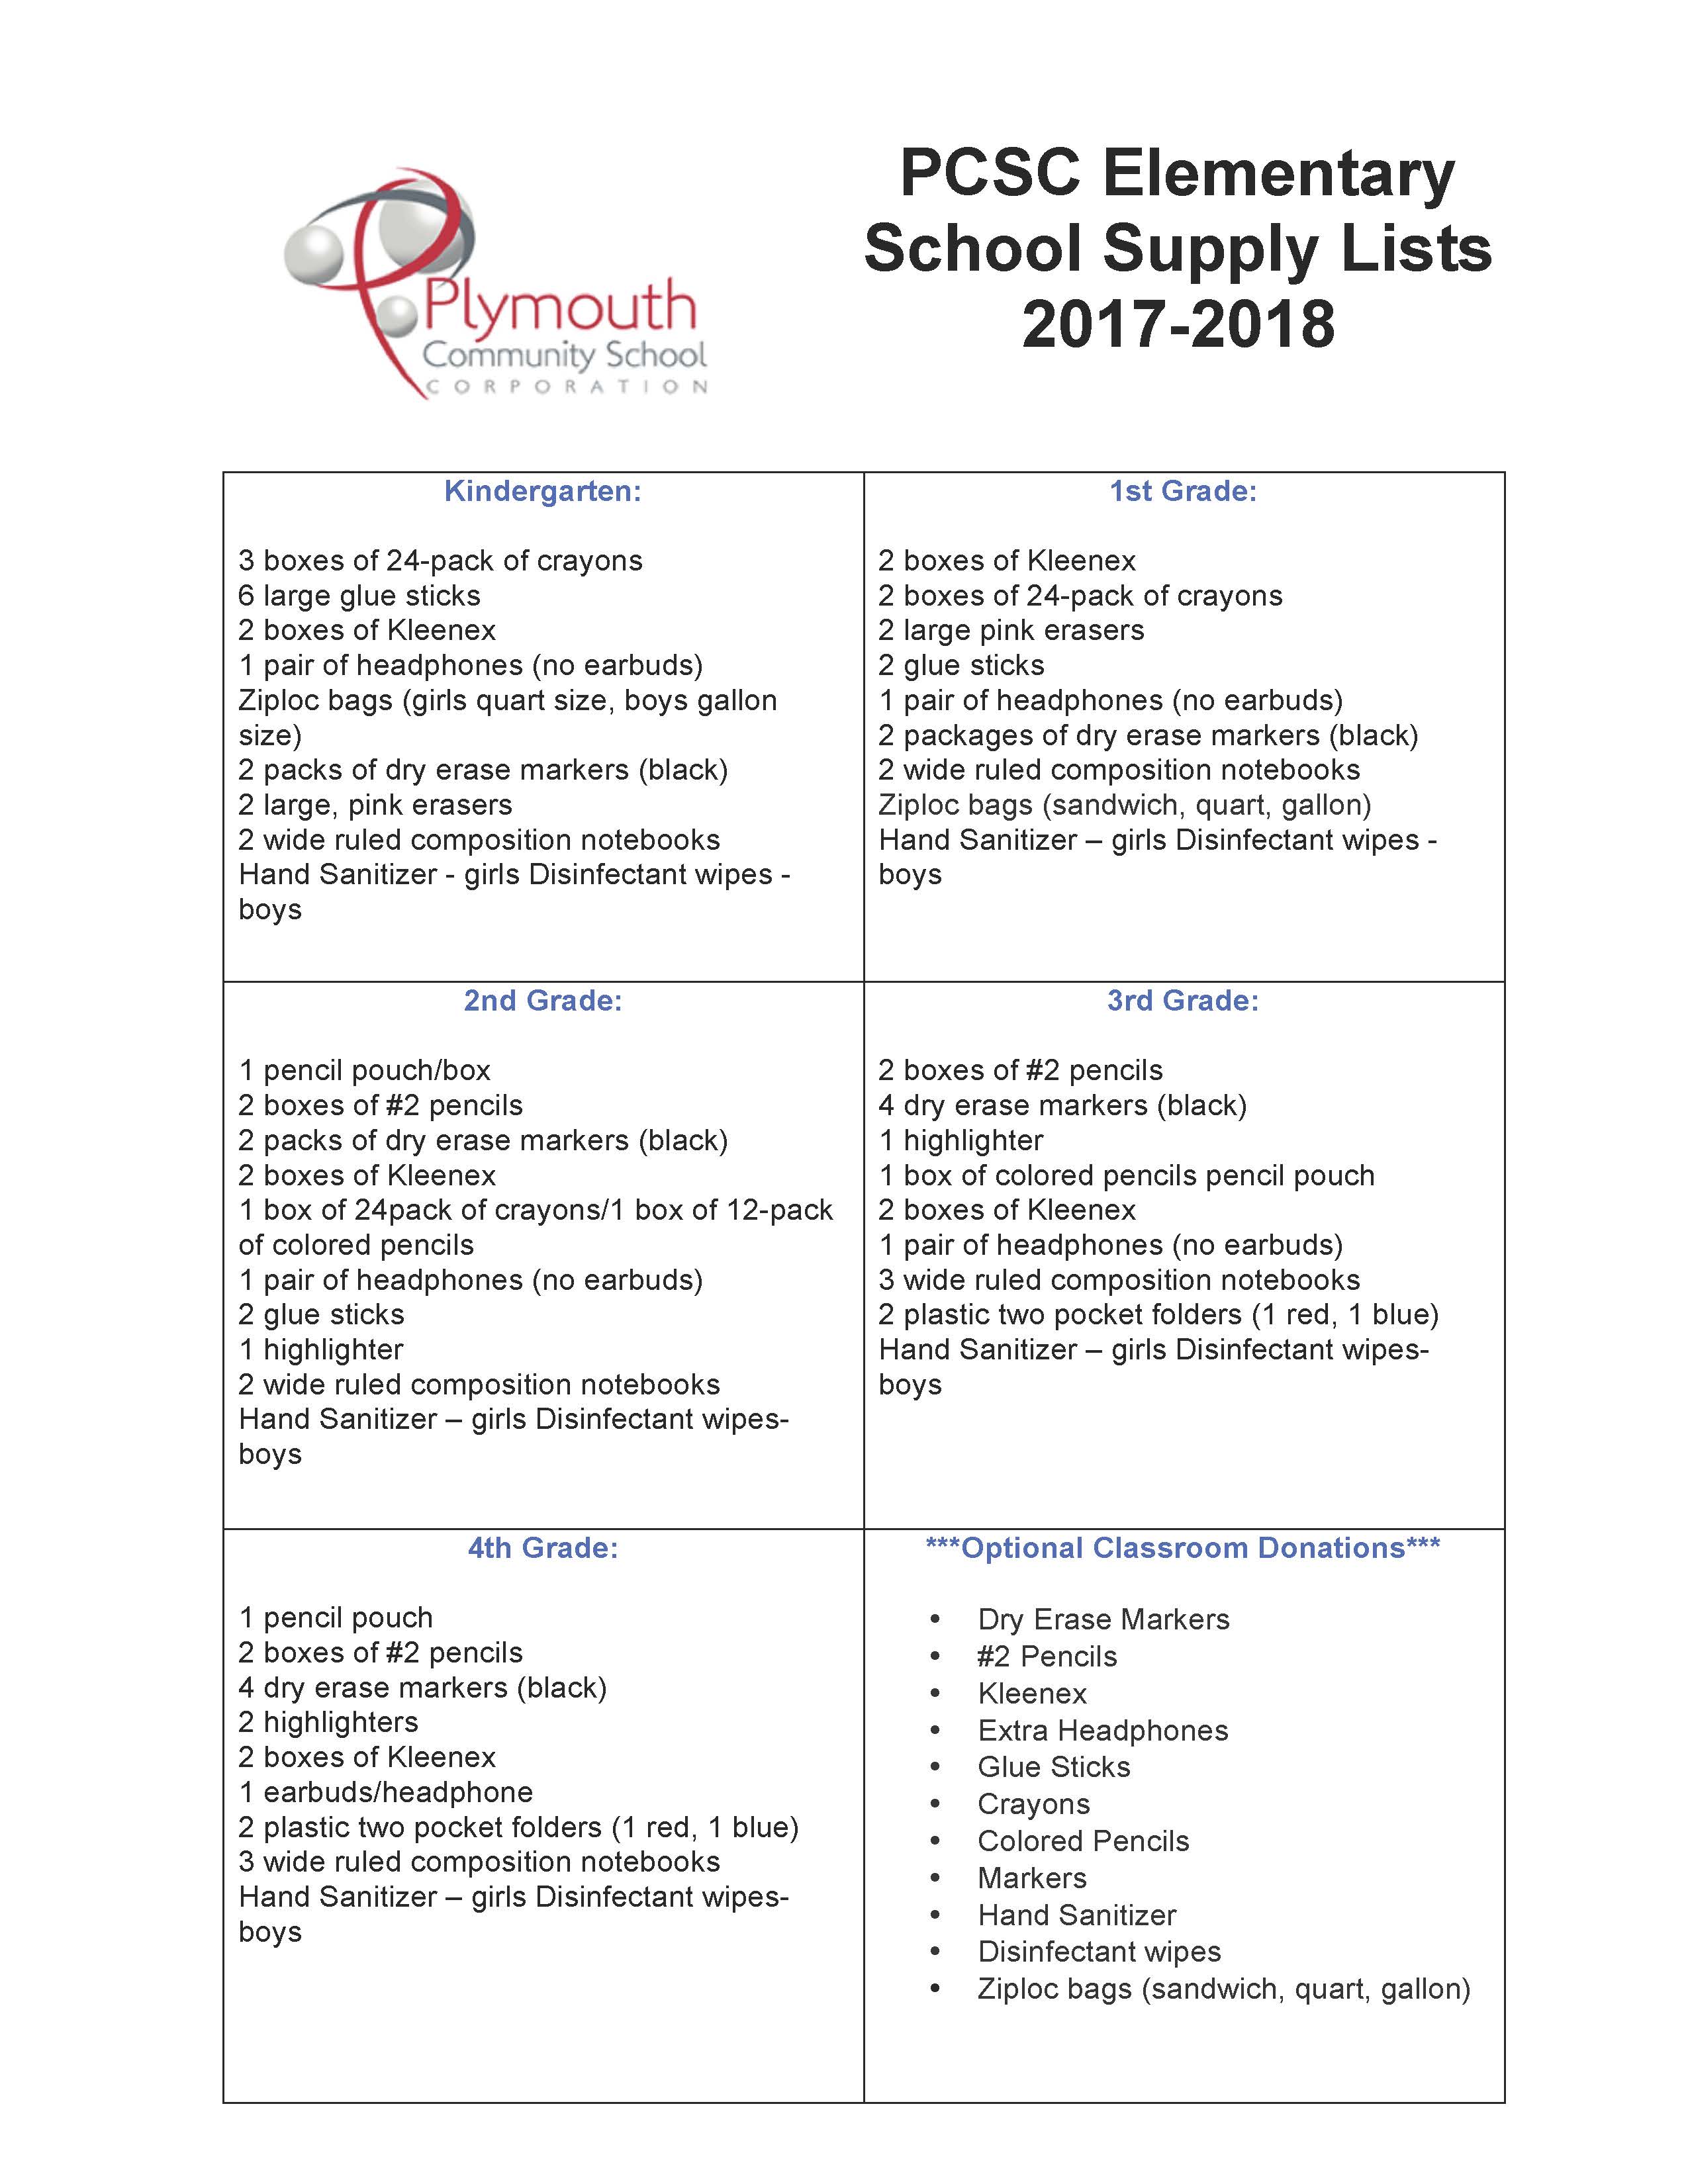 PCSC Elementary School Supply Lists 2017-2018